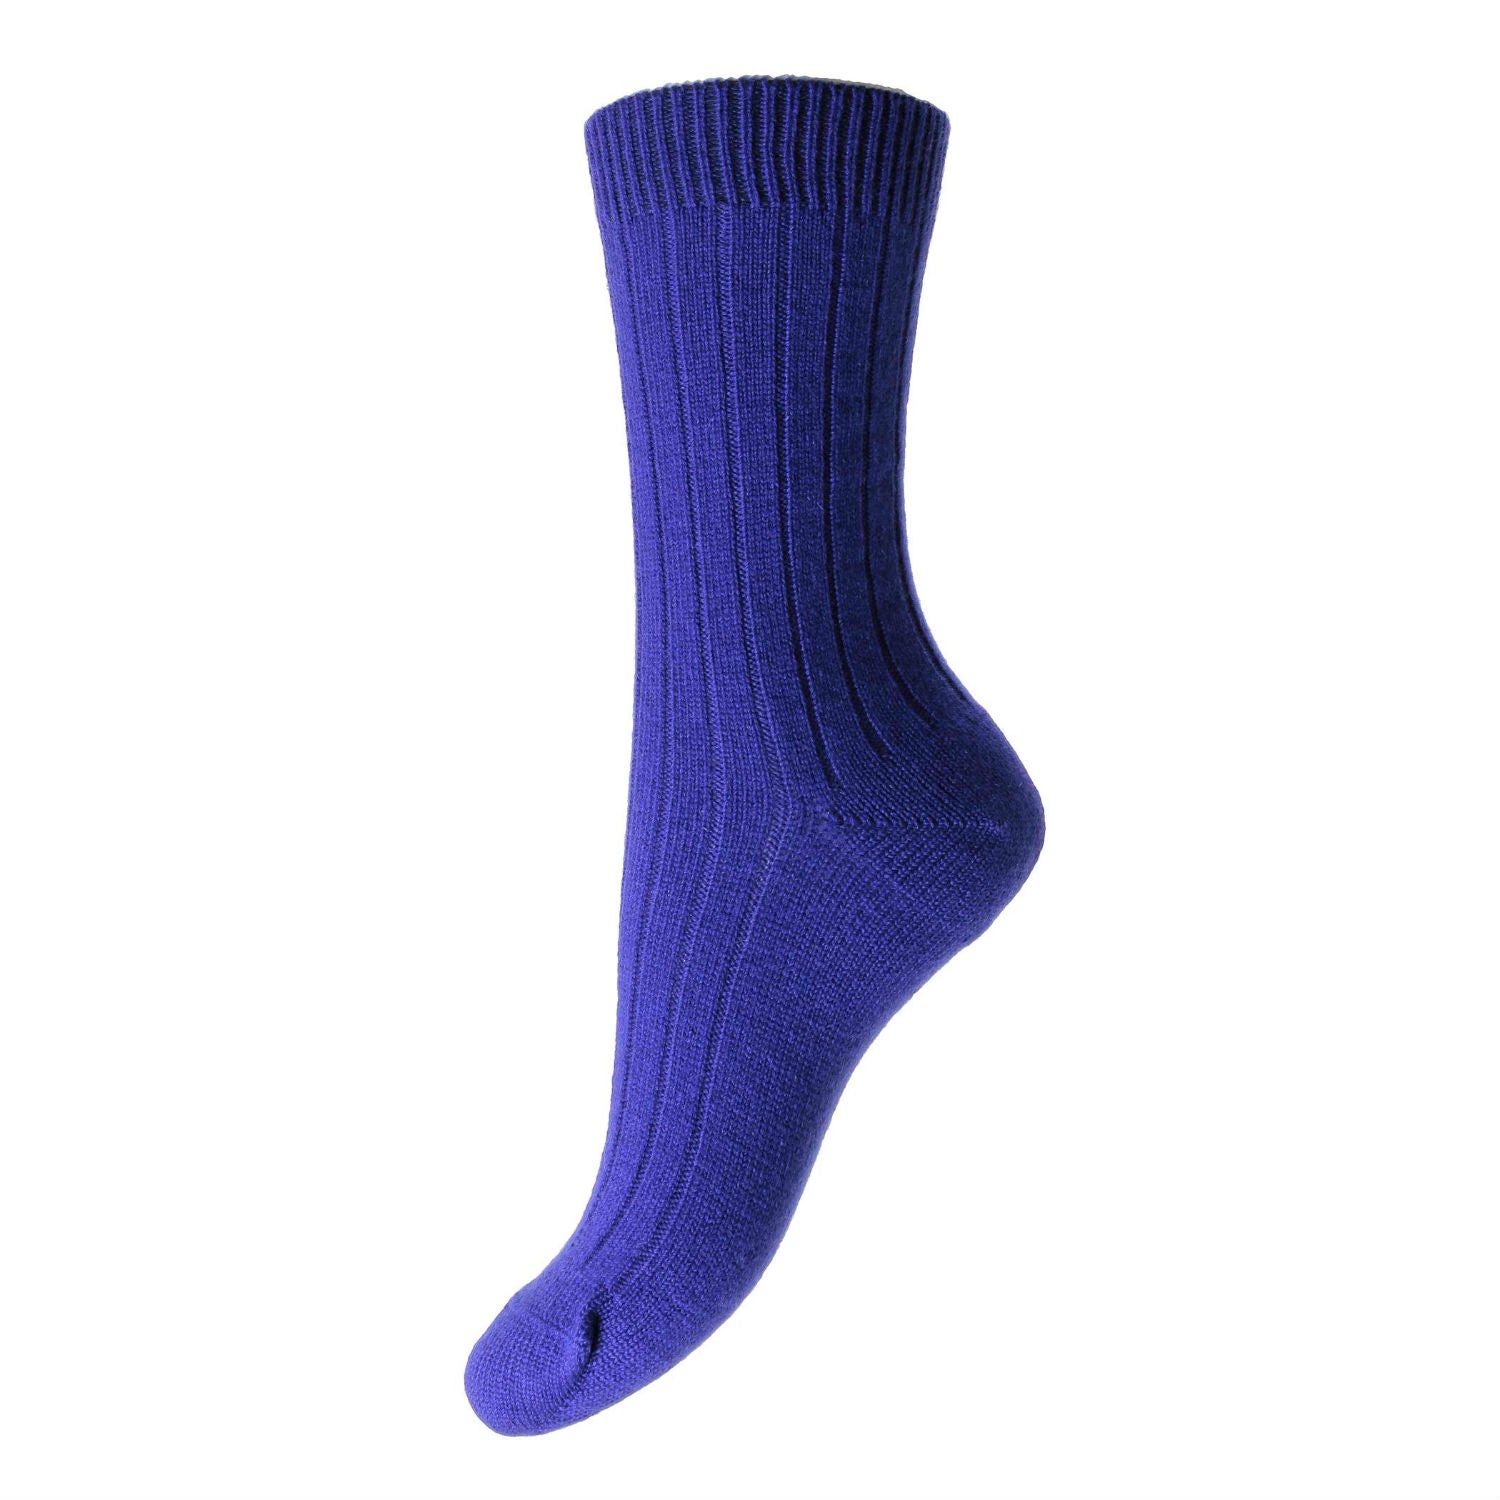 Pantherella women's socks - cashmere - deep blue